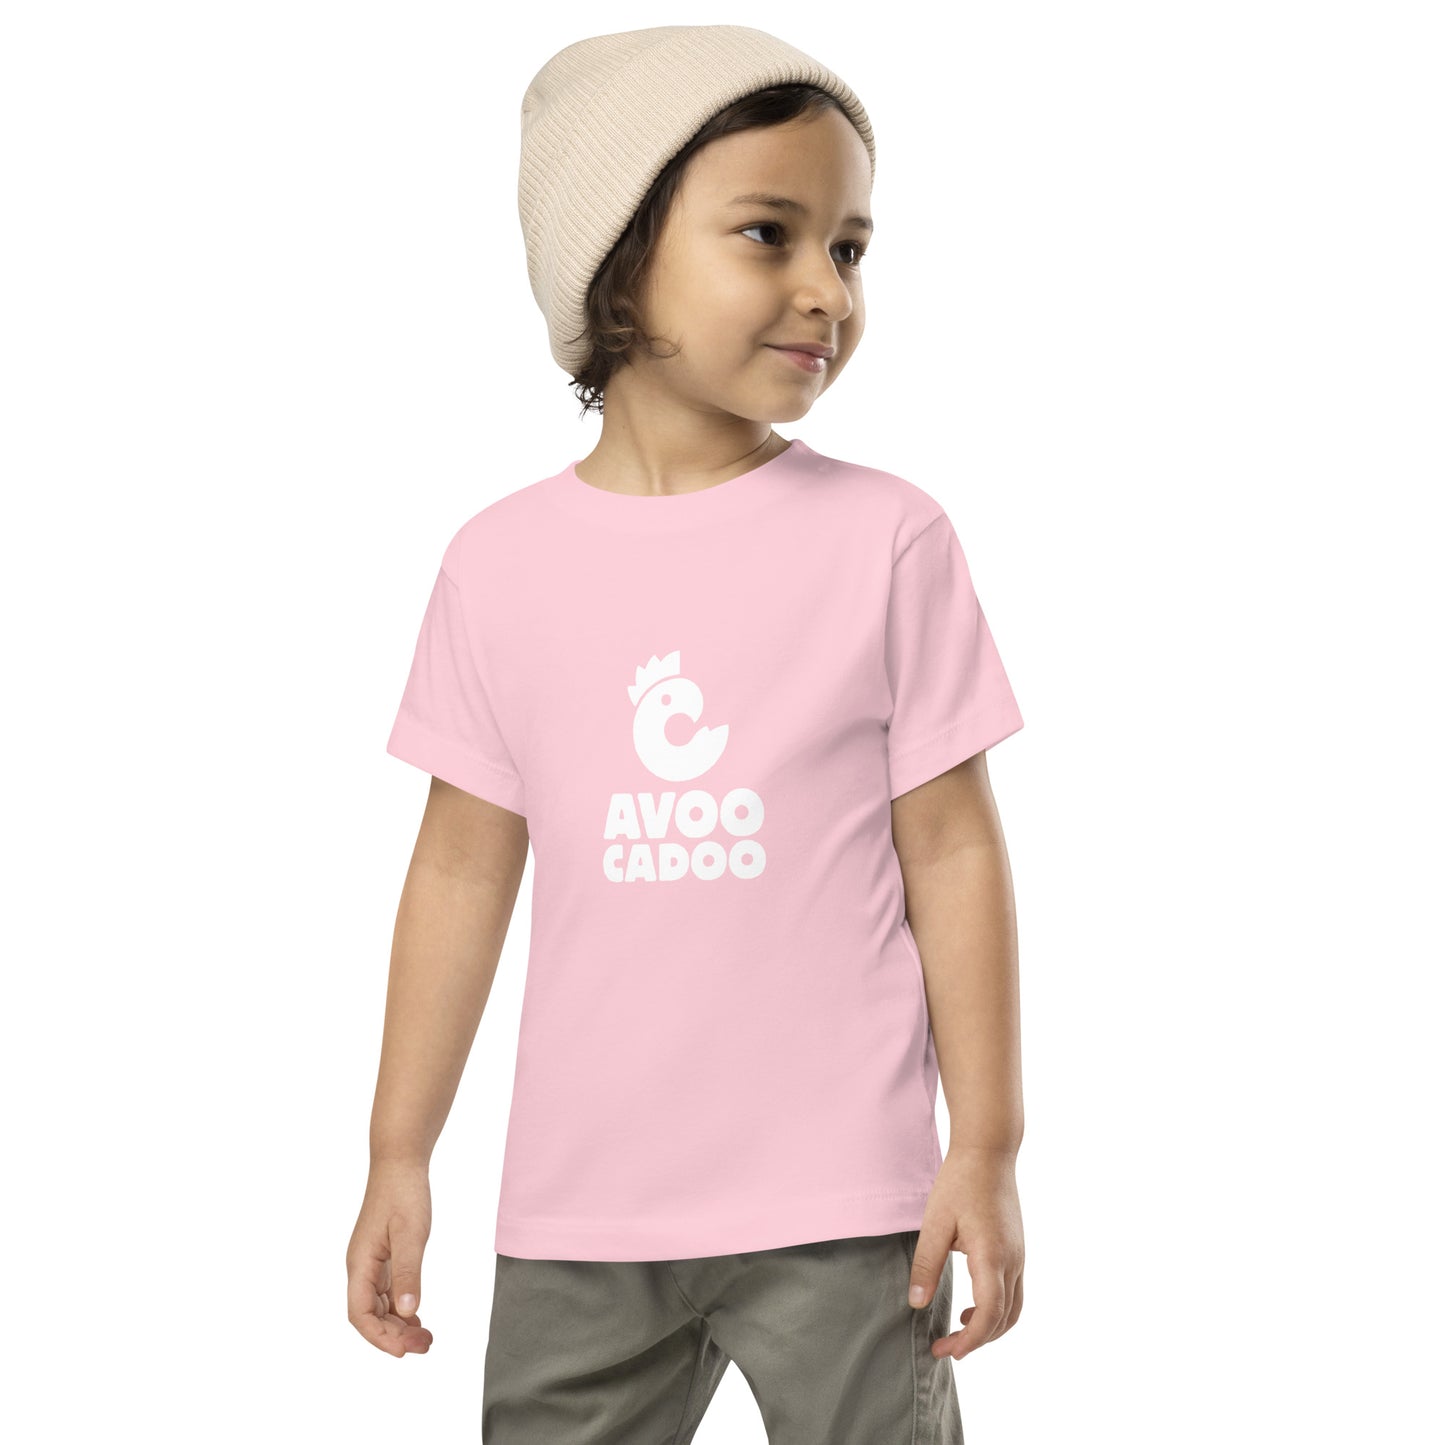 Kurzärmeliges Kids-T-Shirt